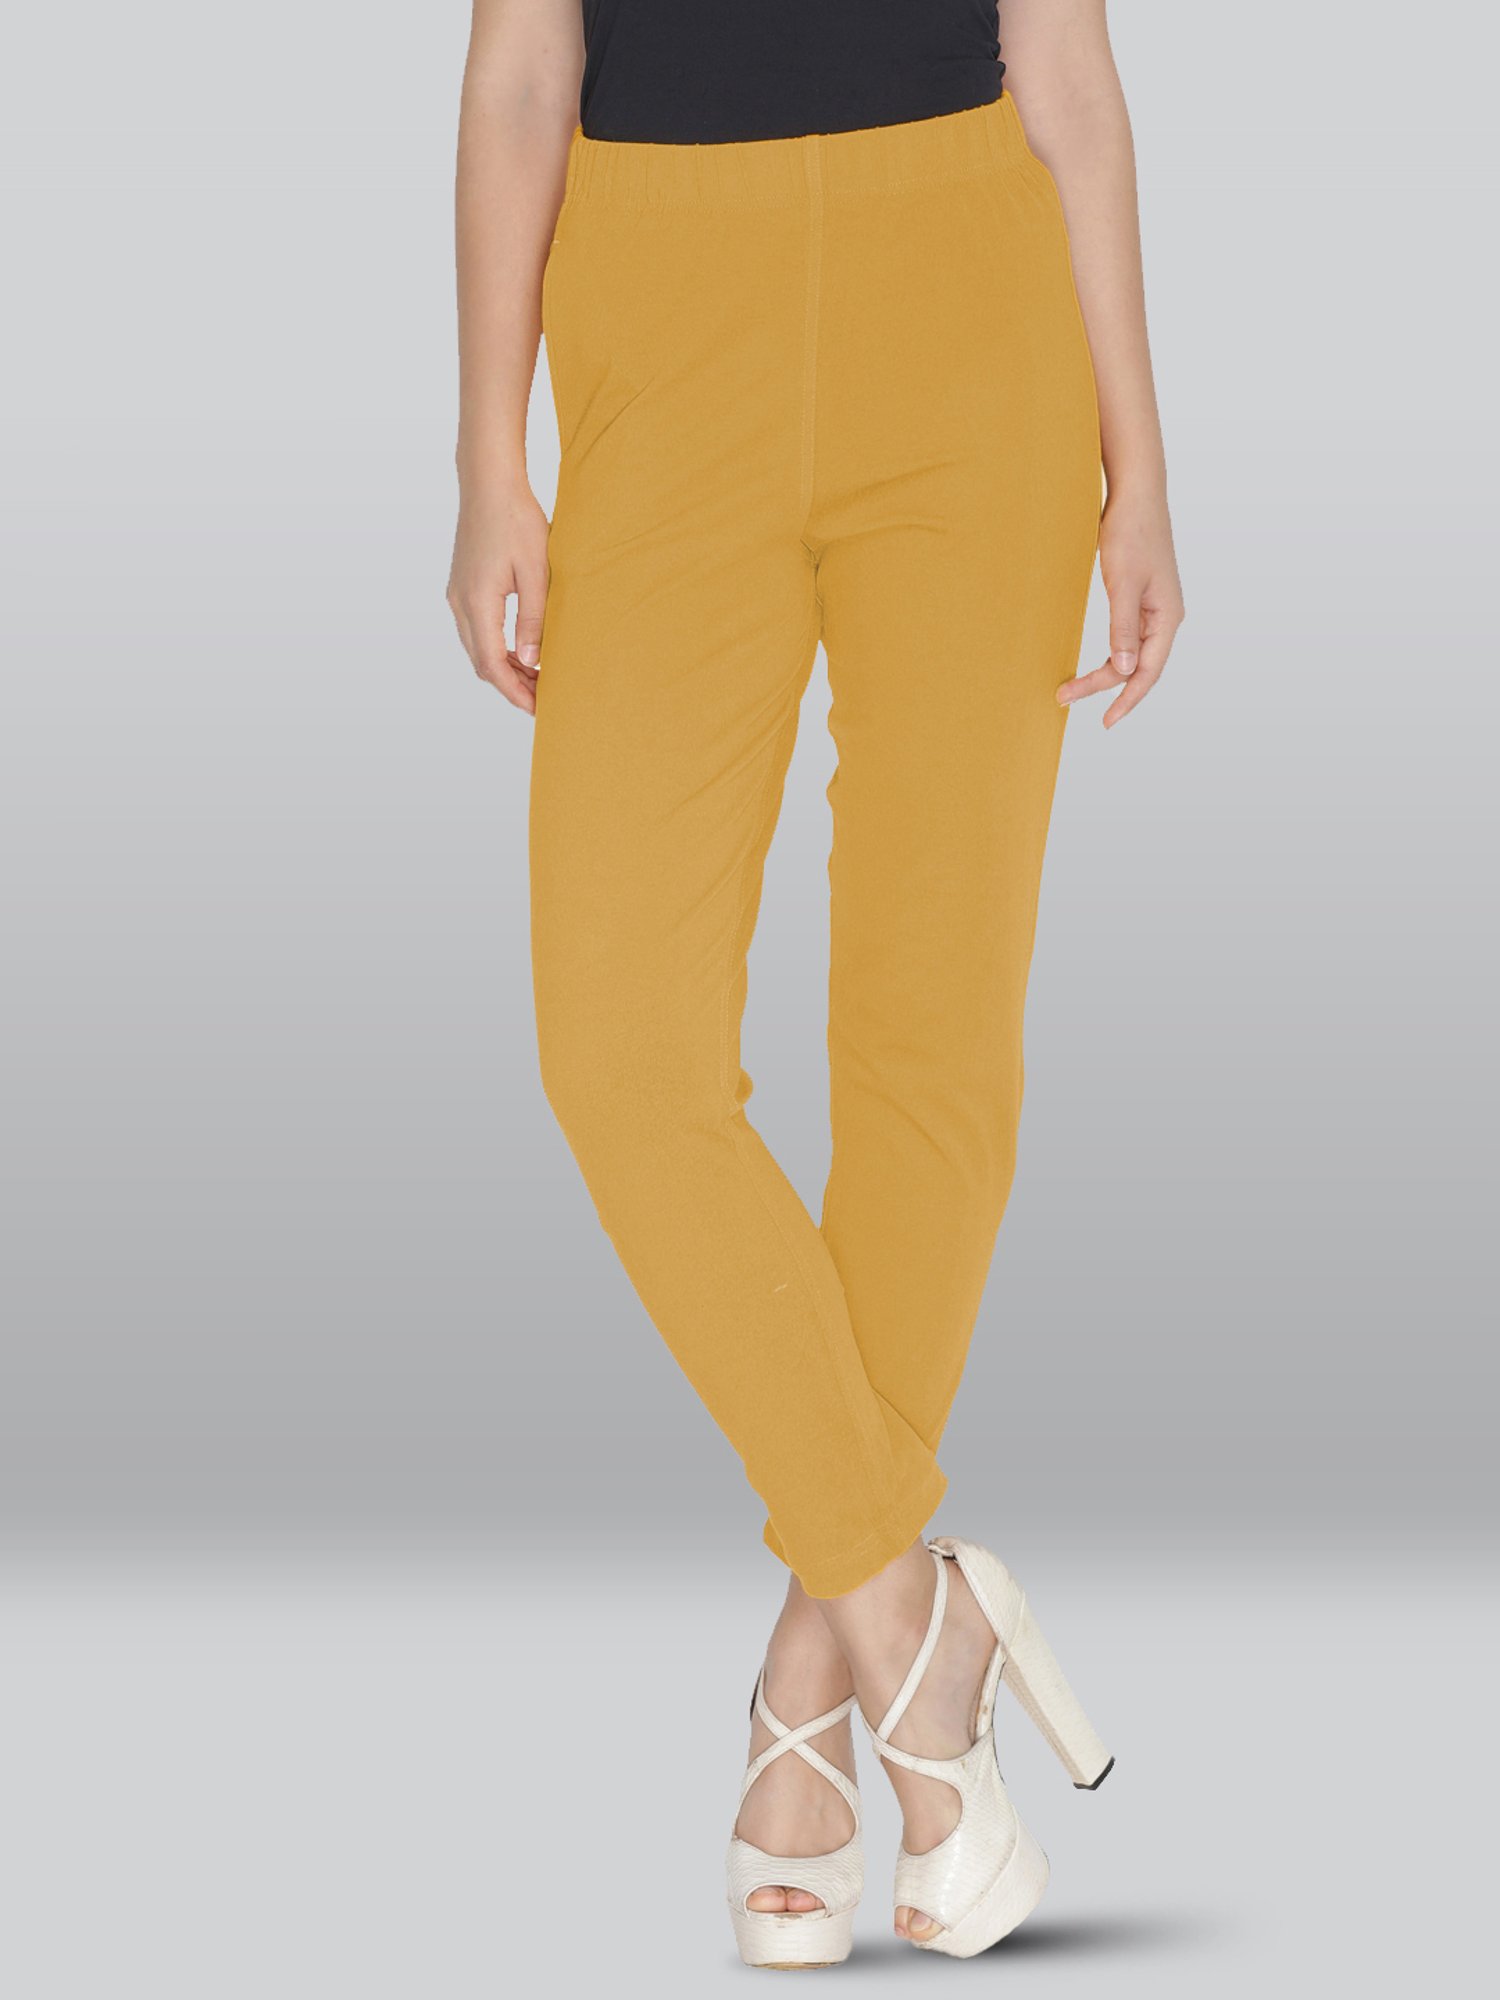 Trishaa Women Yellow Pant Kurta Set - Selling Fast at Pantaloons.com